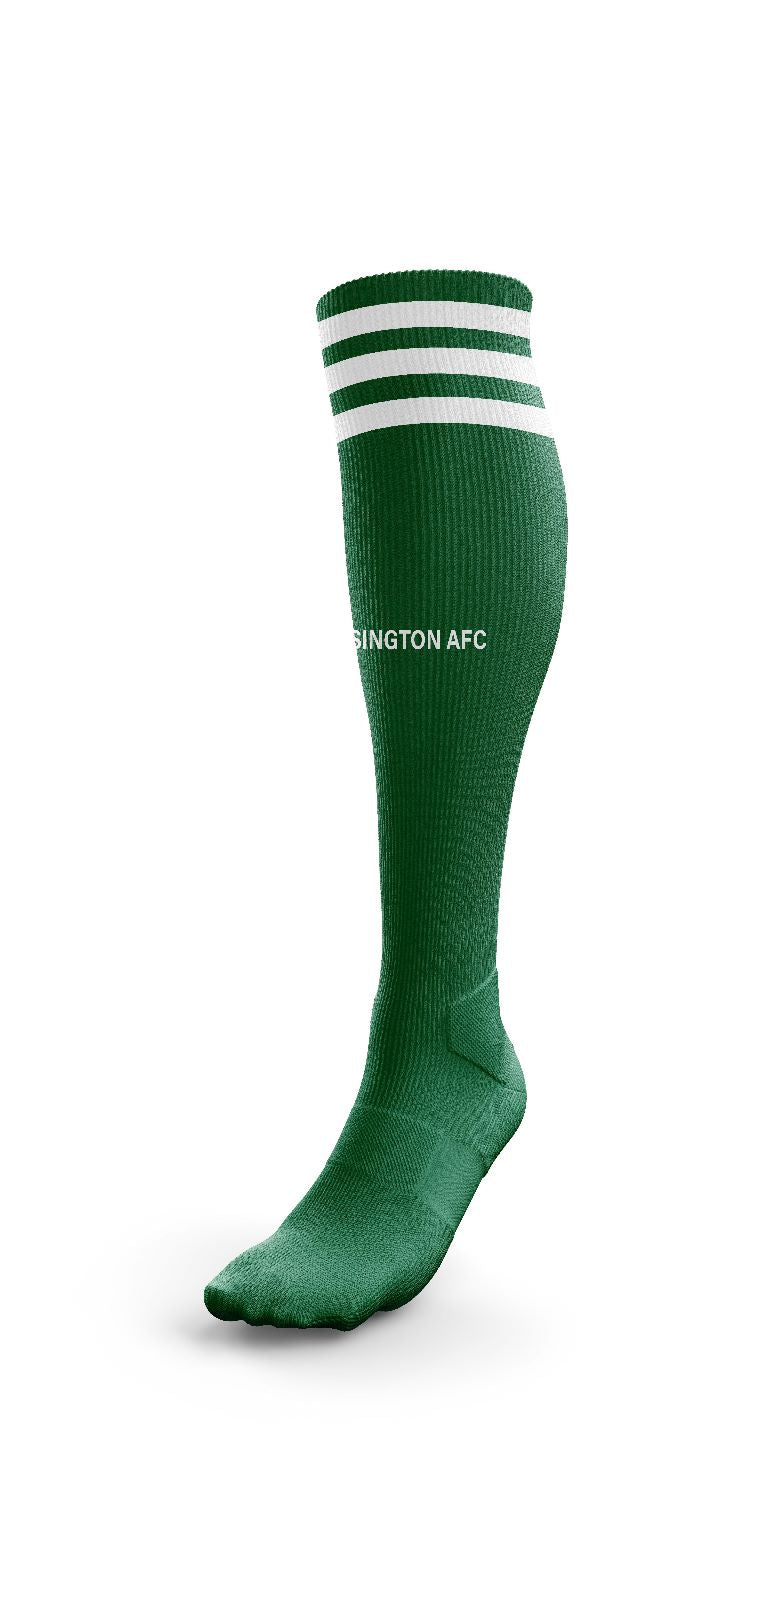 Blessington AFC -Green Socks